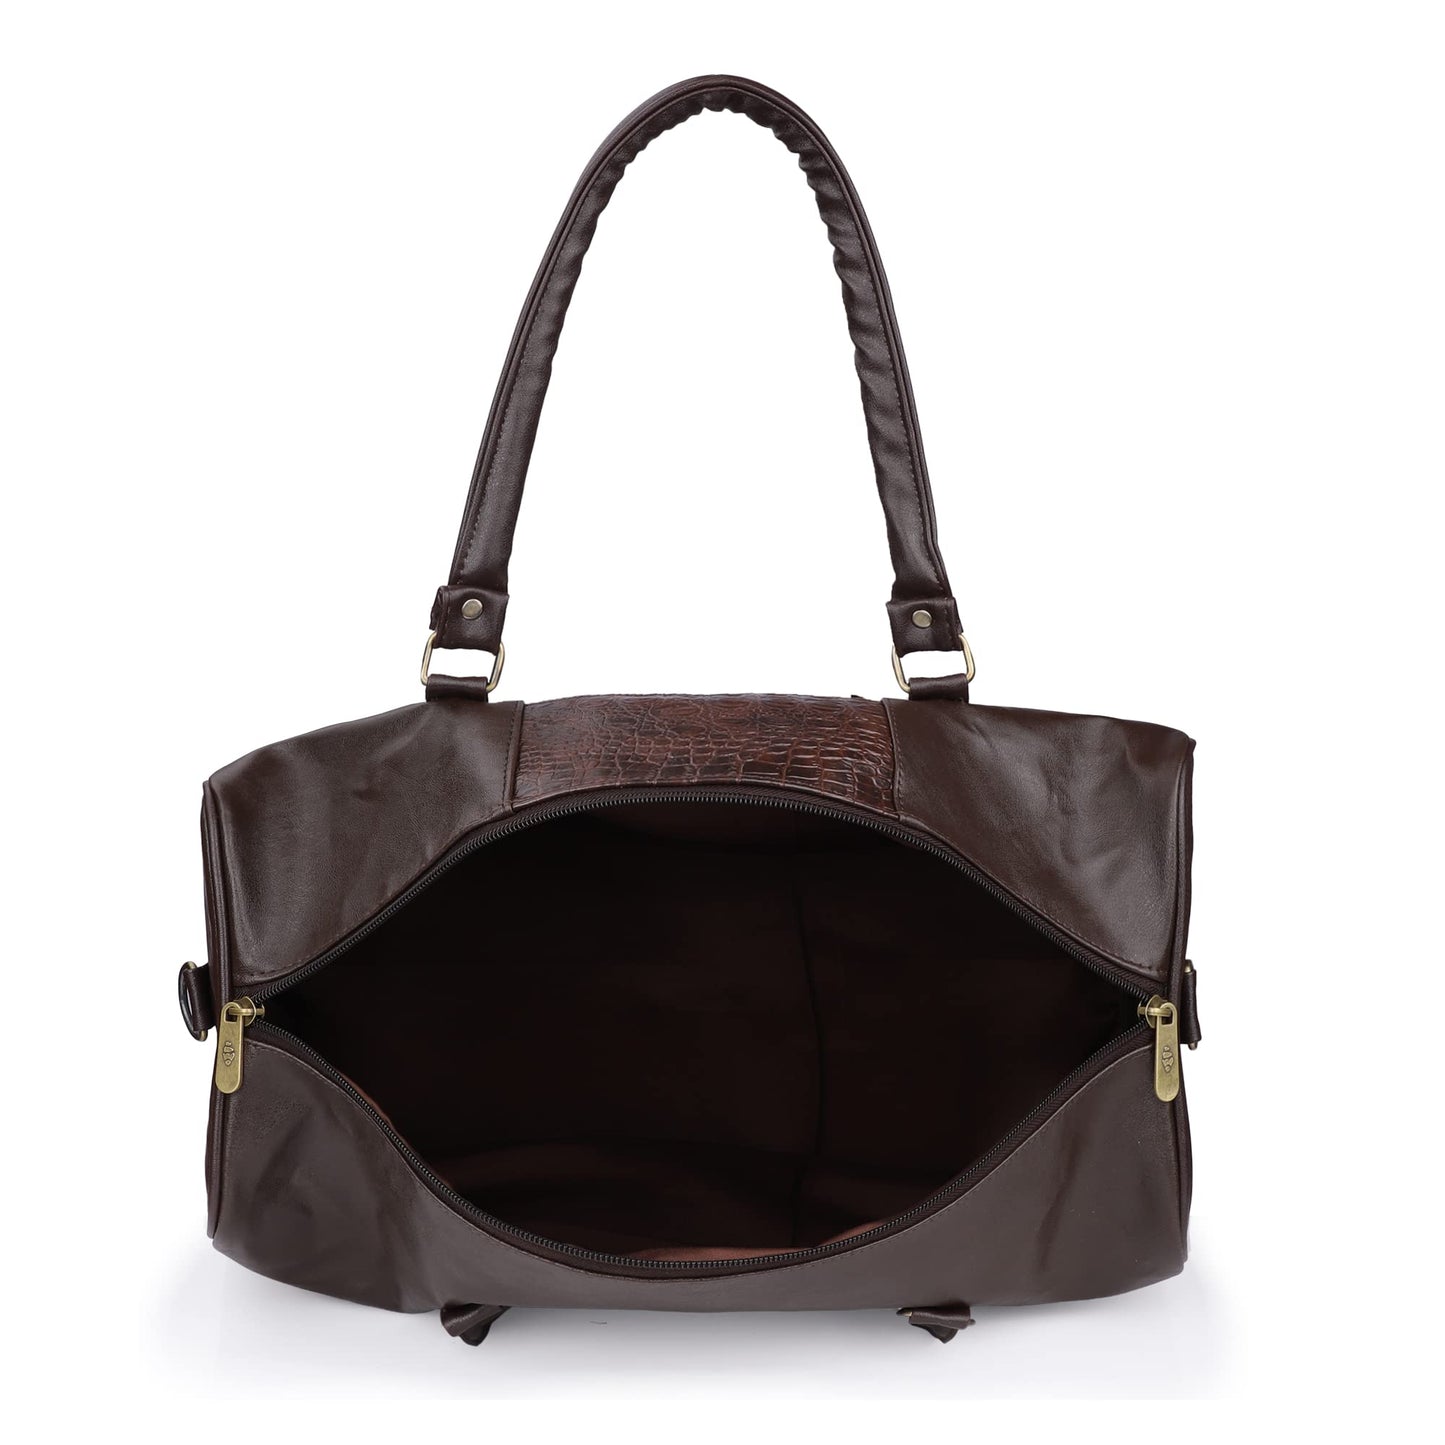 The Clownfish Jordan 25 litres Unisex Faux Leather Travel Duffle Bag Weekender Bag (Dark Brown)